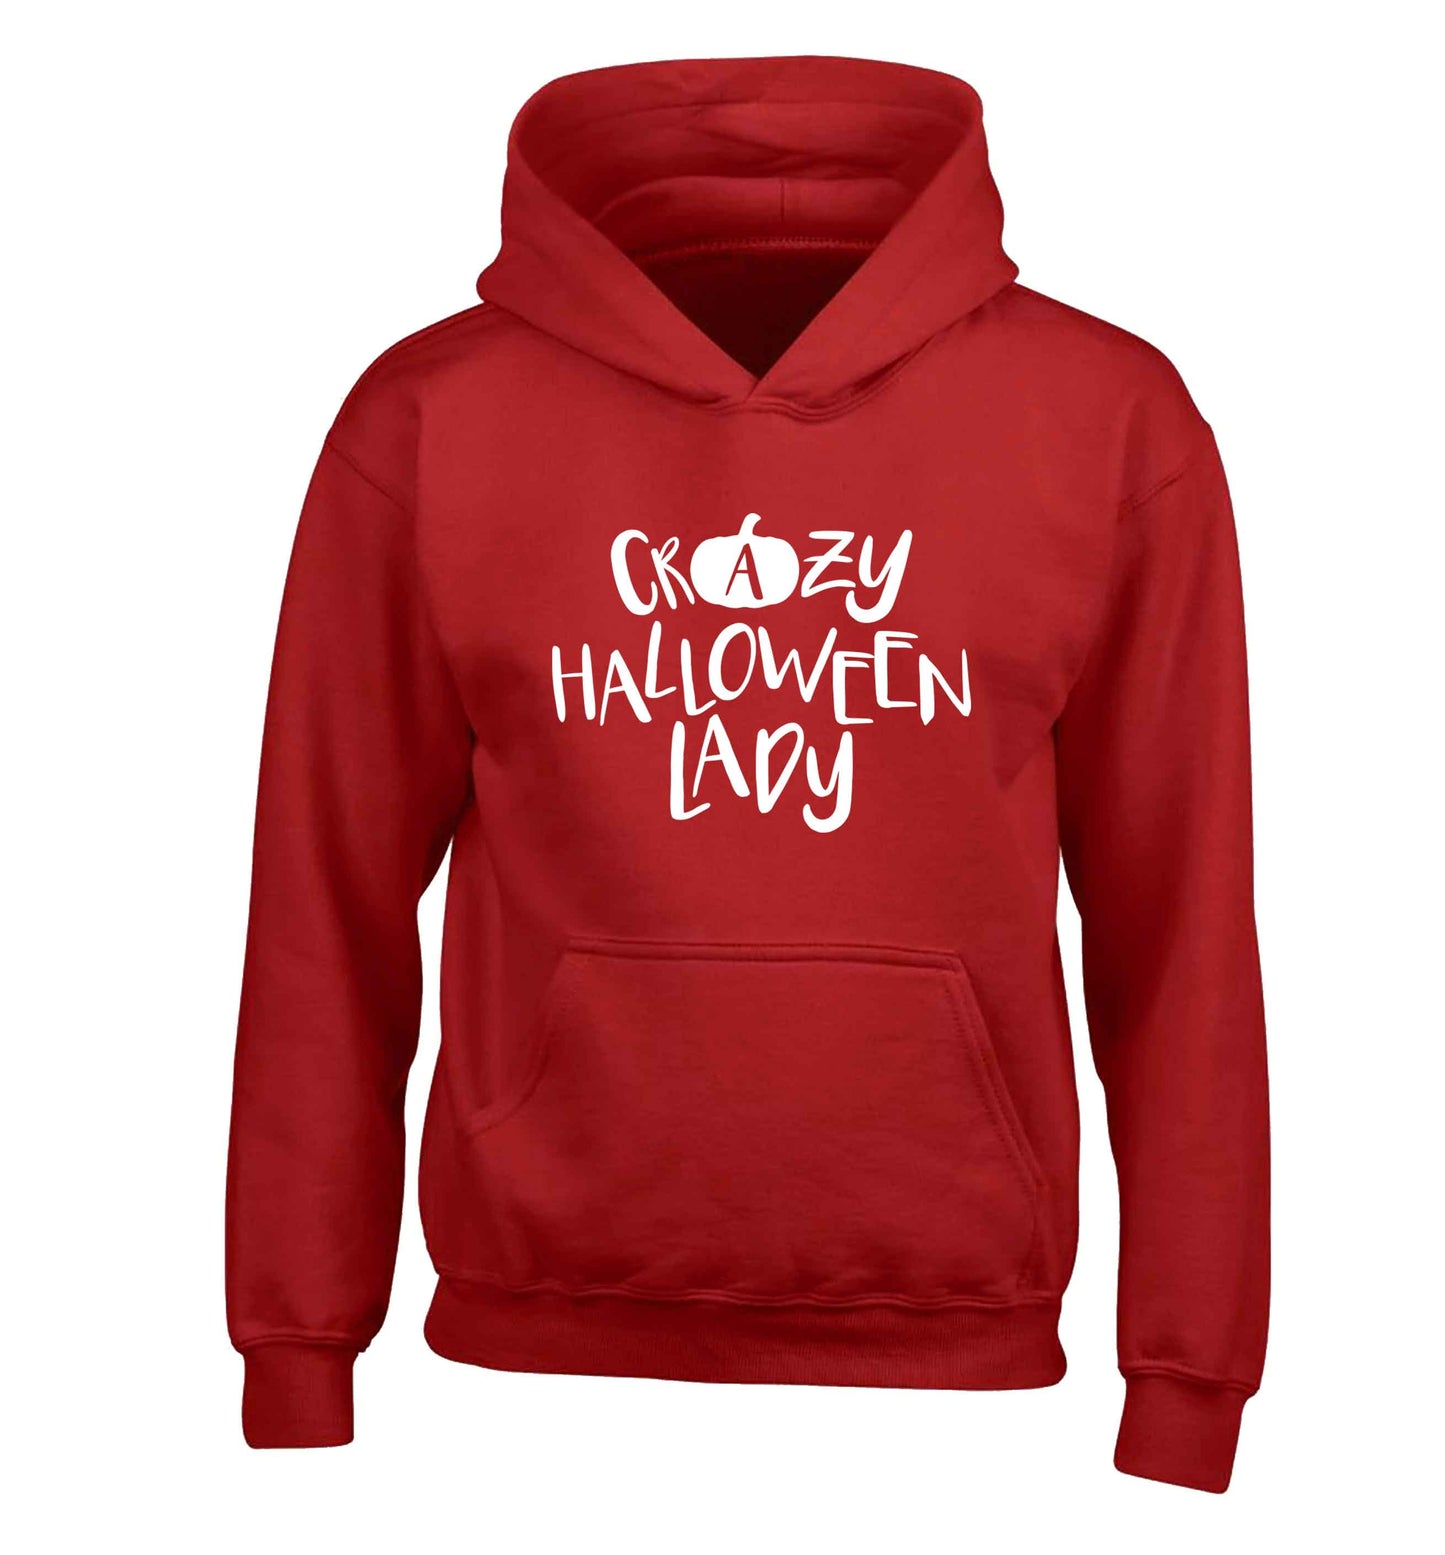 Crazy halloween lady children's red hoodie 12-13 Years